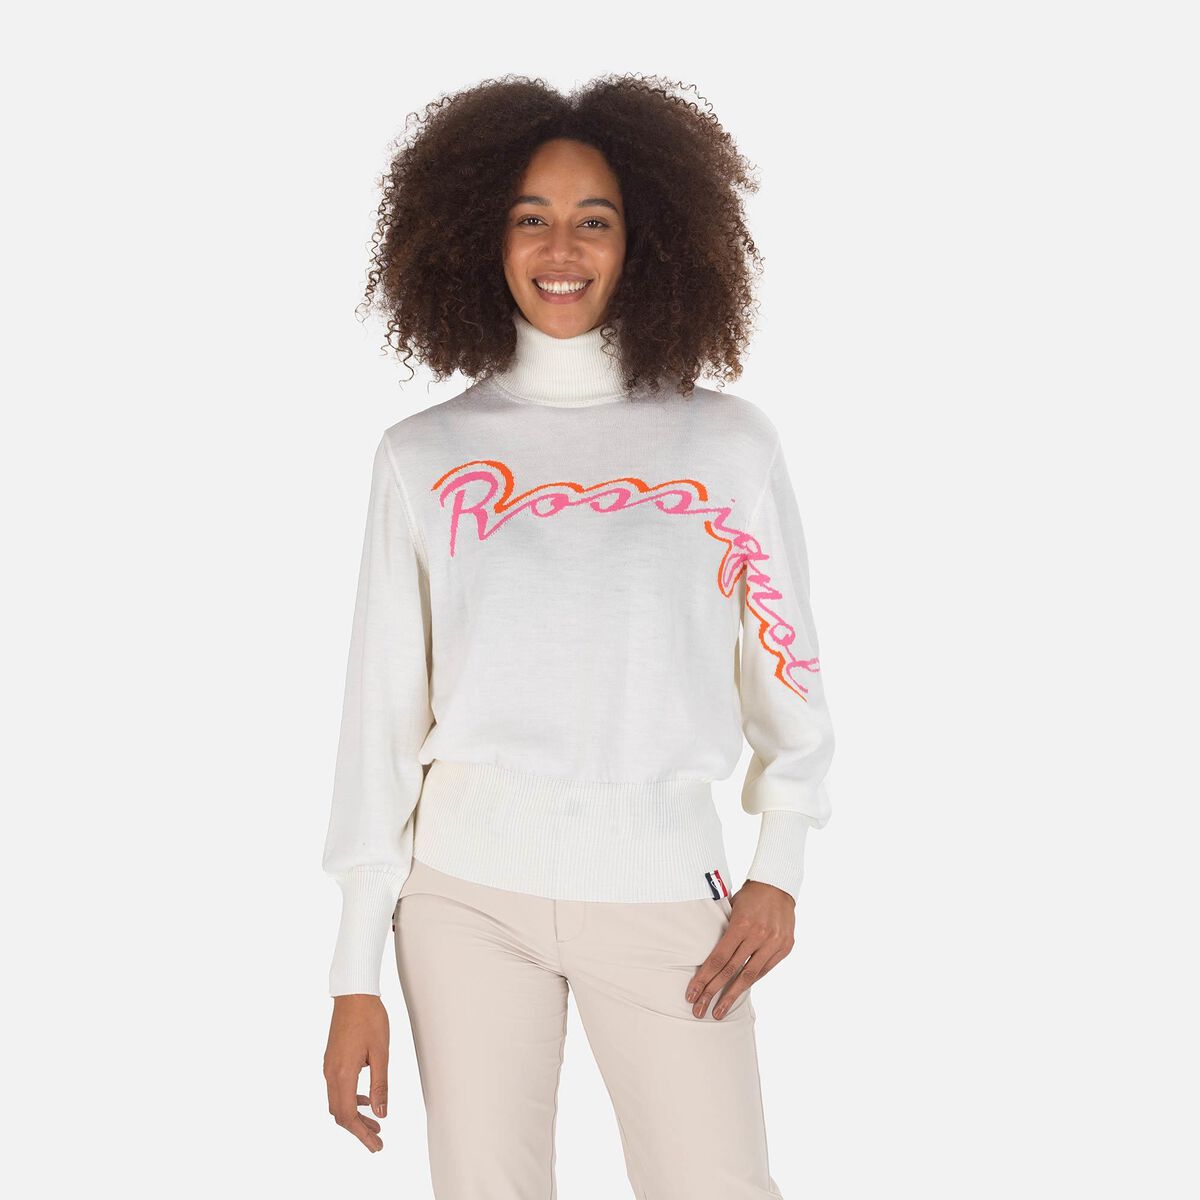 SIGNATURE White Sweatshirt – Femme Progressive